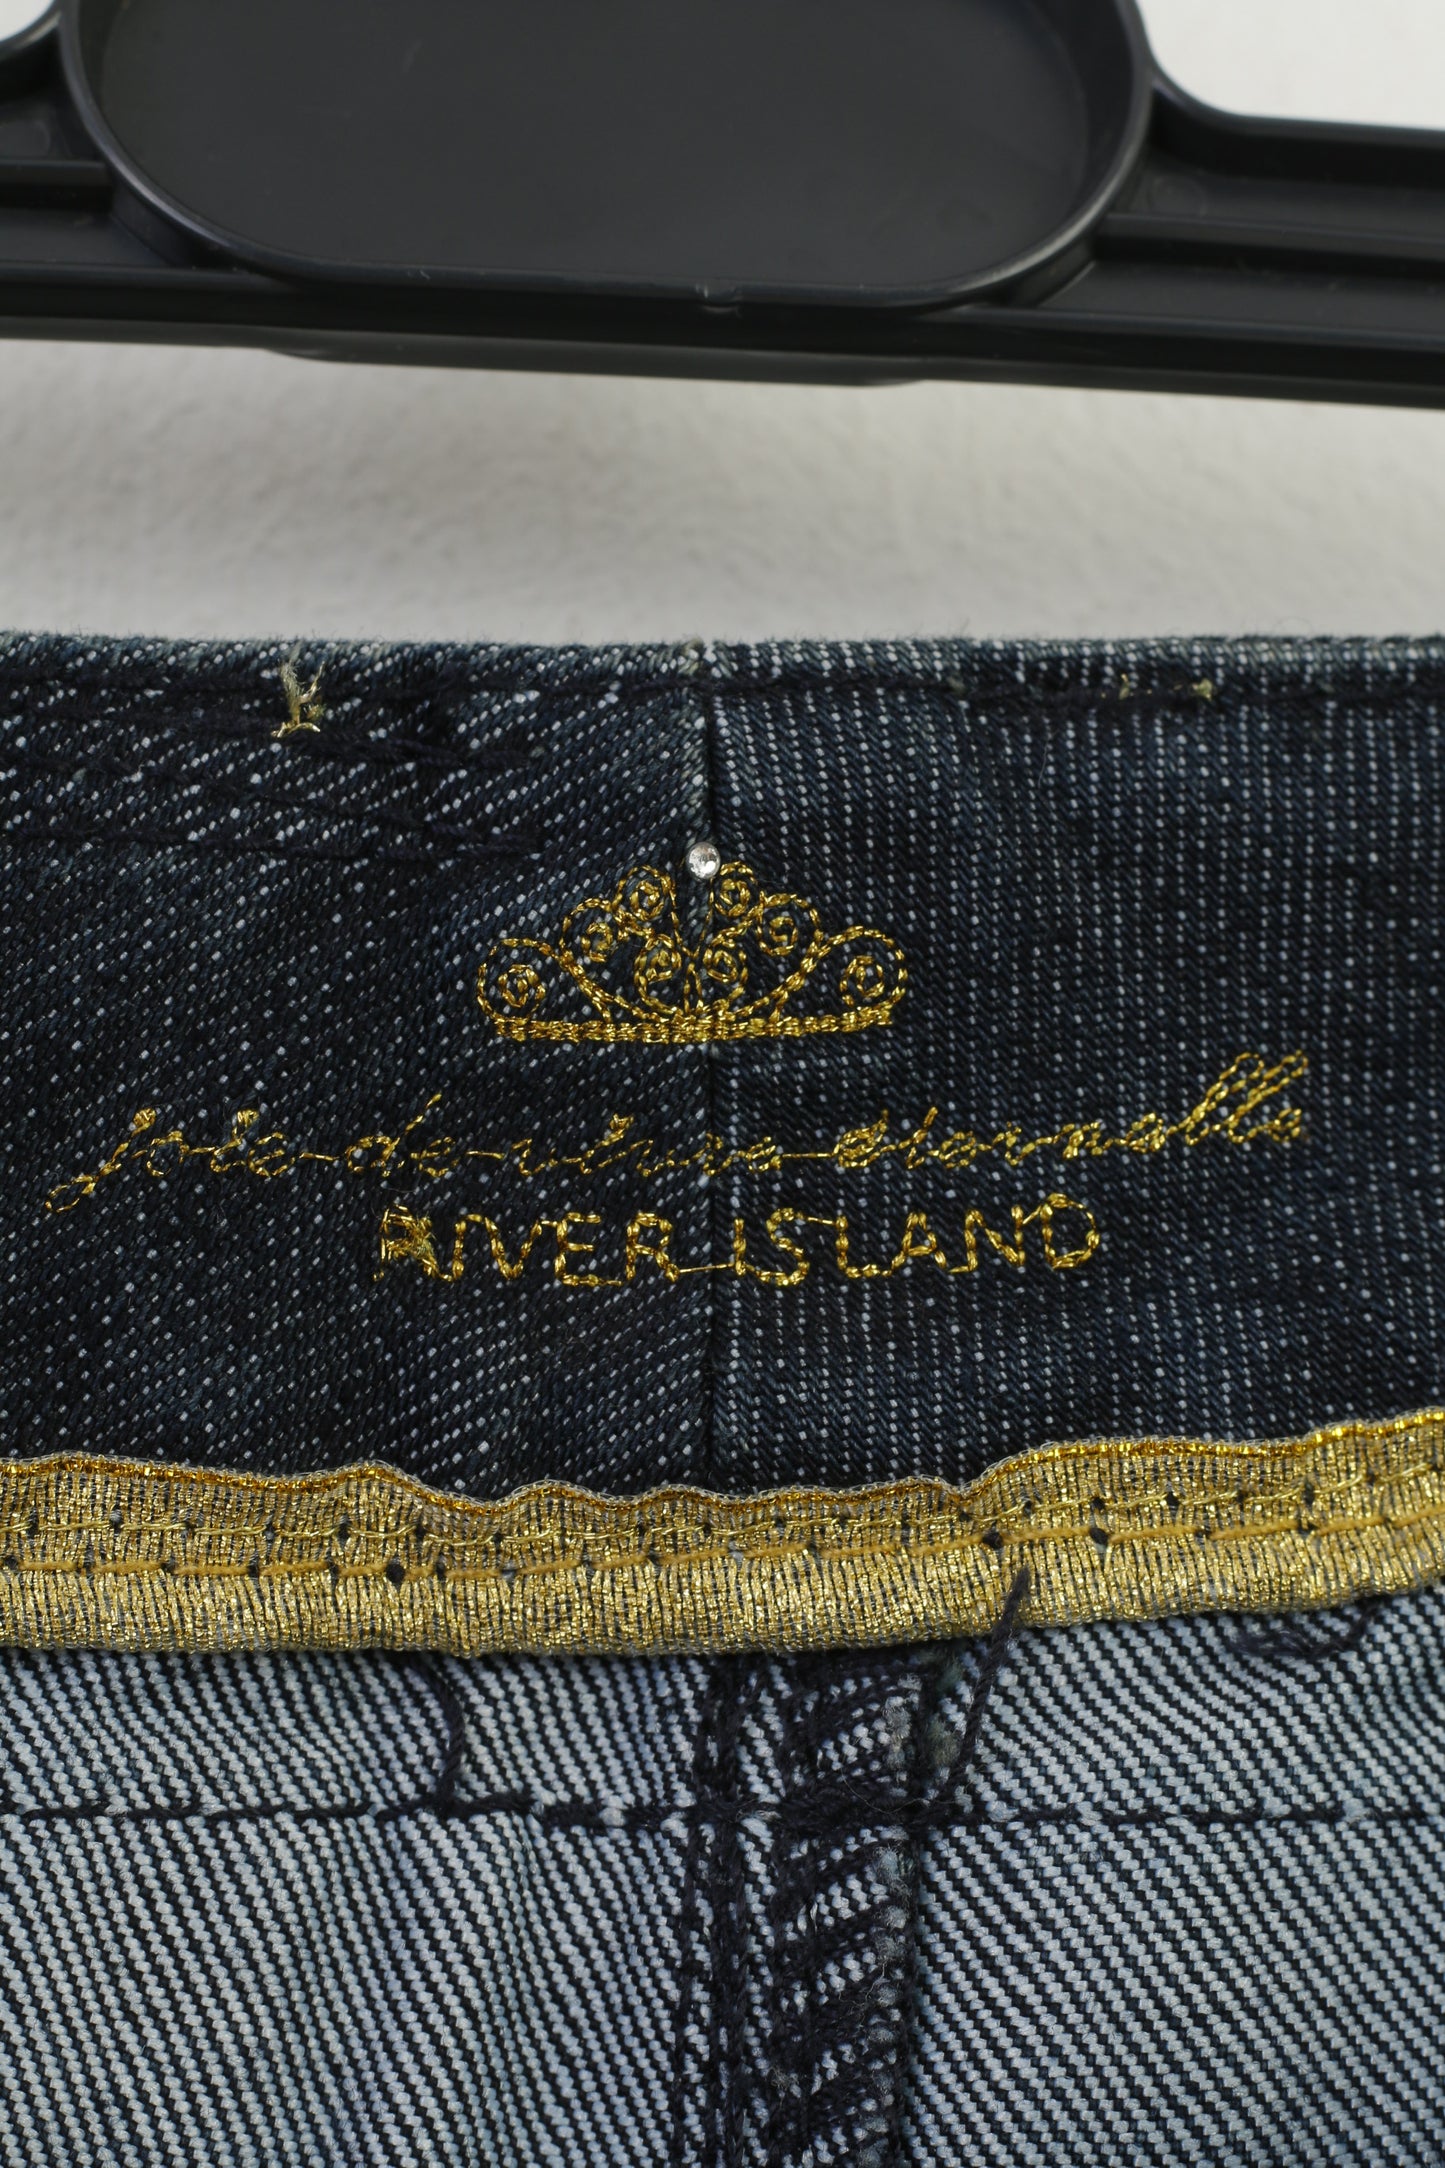 River Island Women 12 38 Jeans Trousers Navy Cotton  Gold Detailed  Original Pants